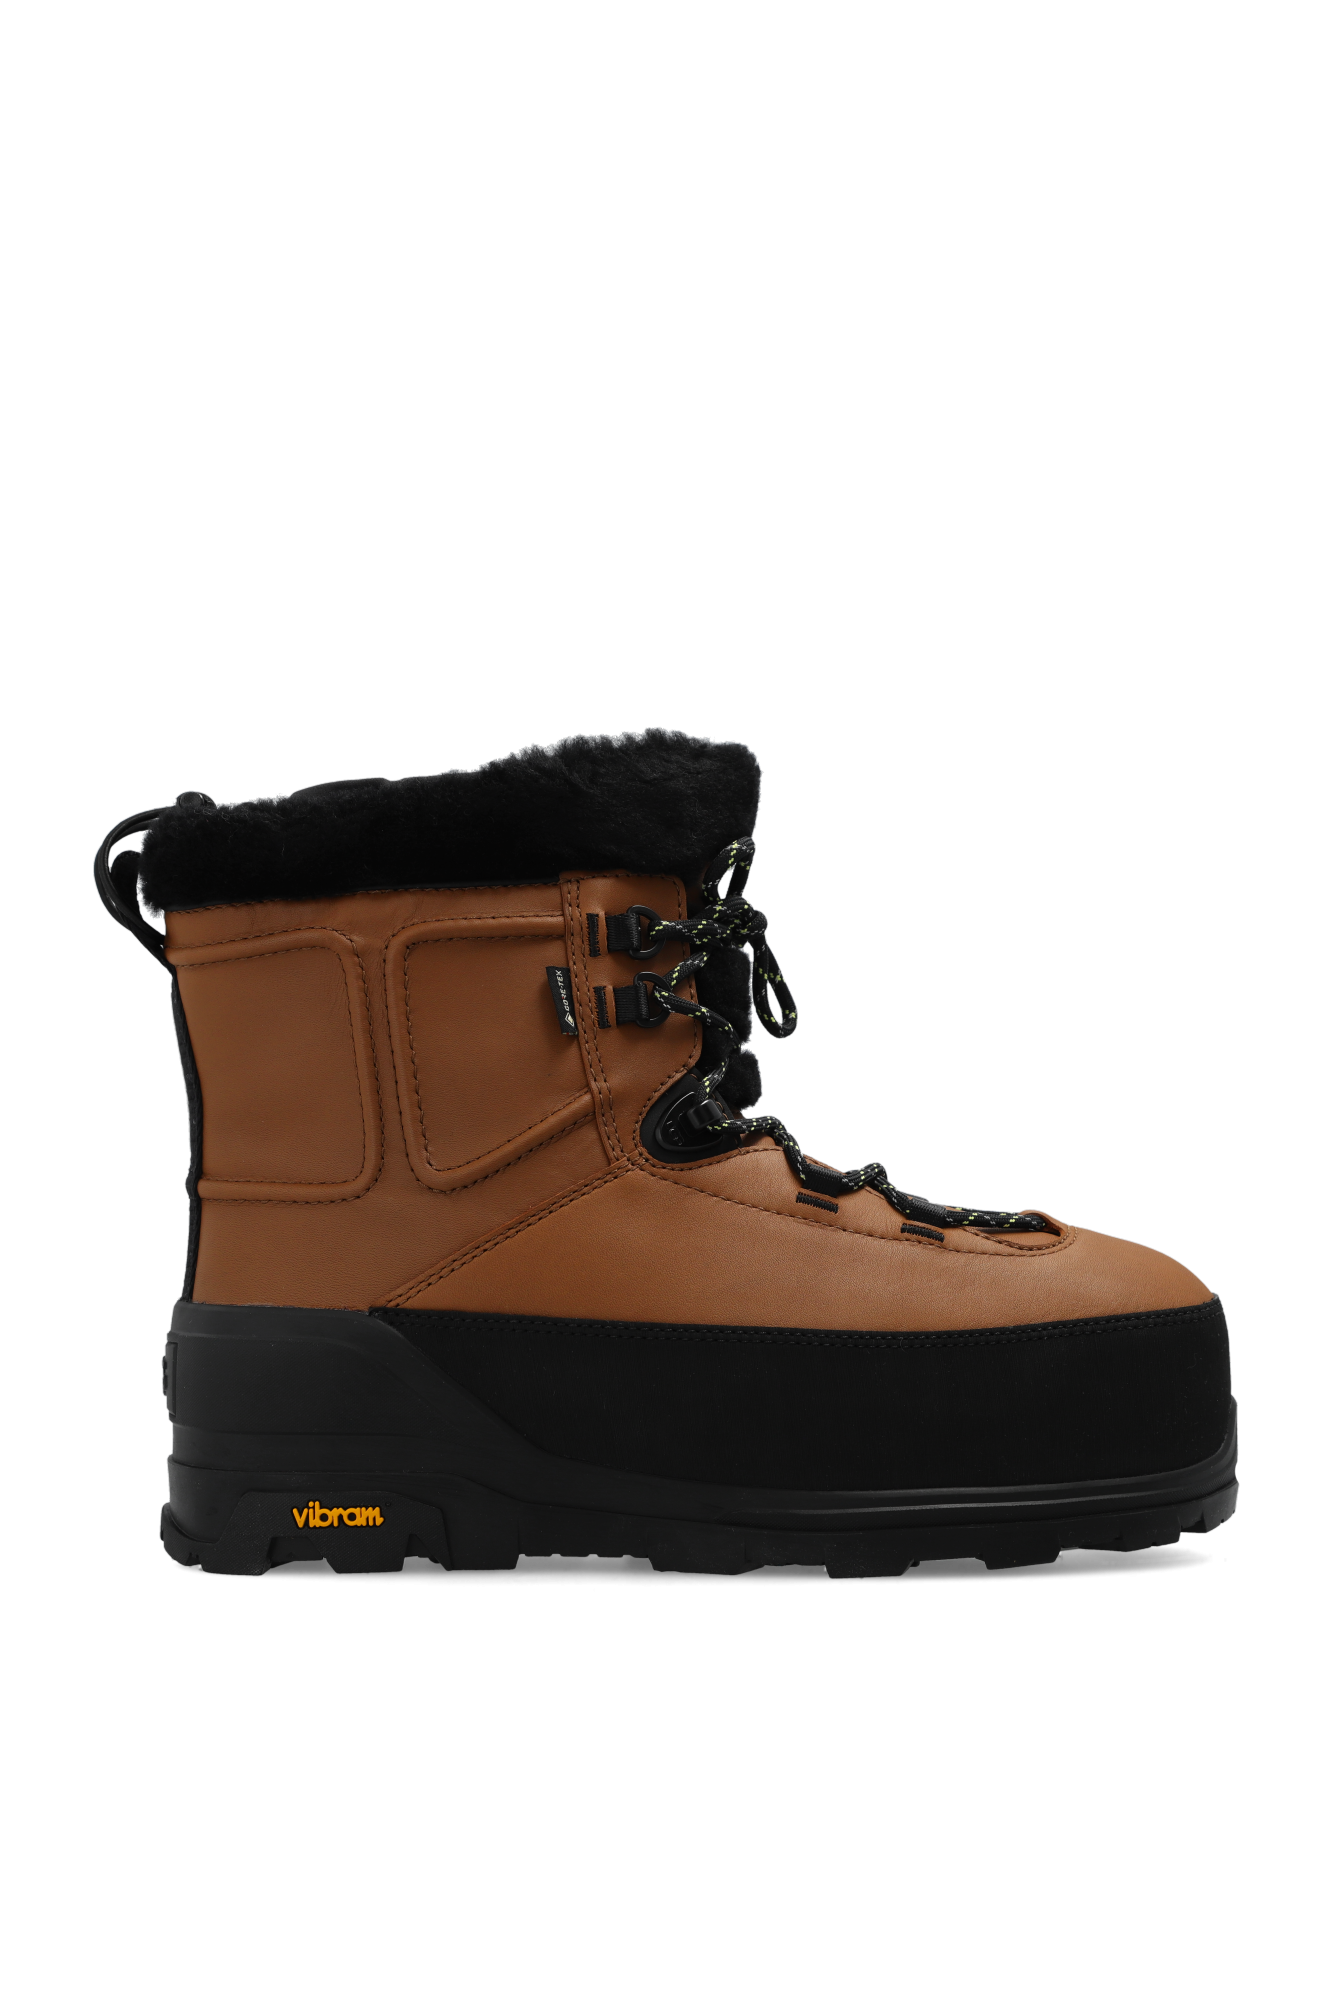 ugg latest ‘Shasta Mid’ snow boots